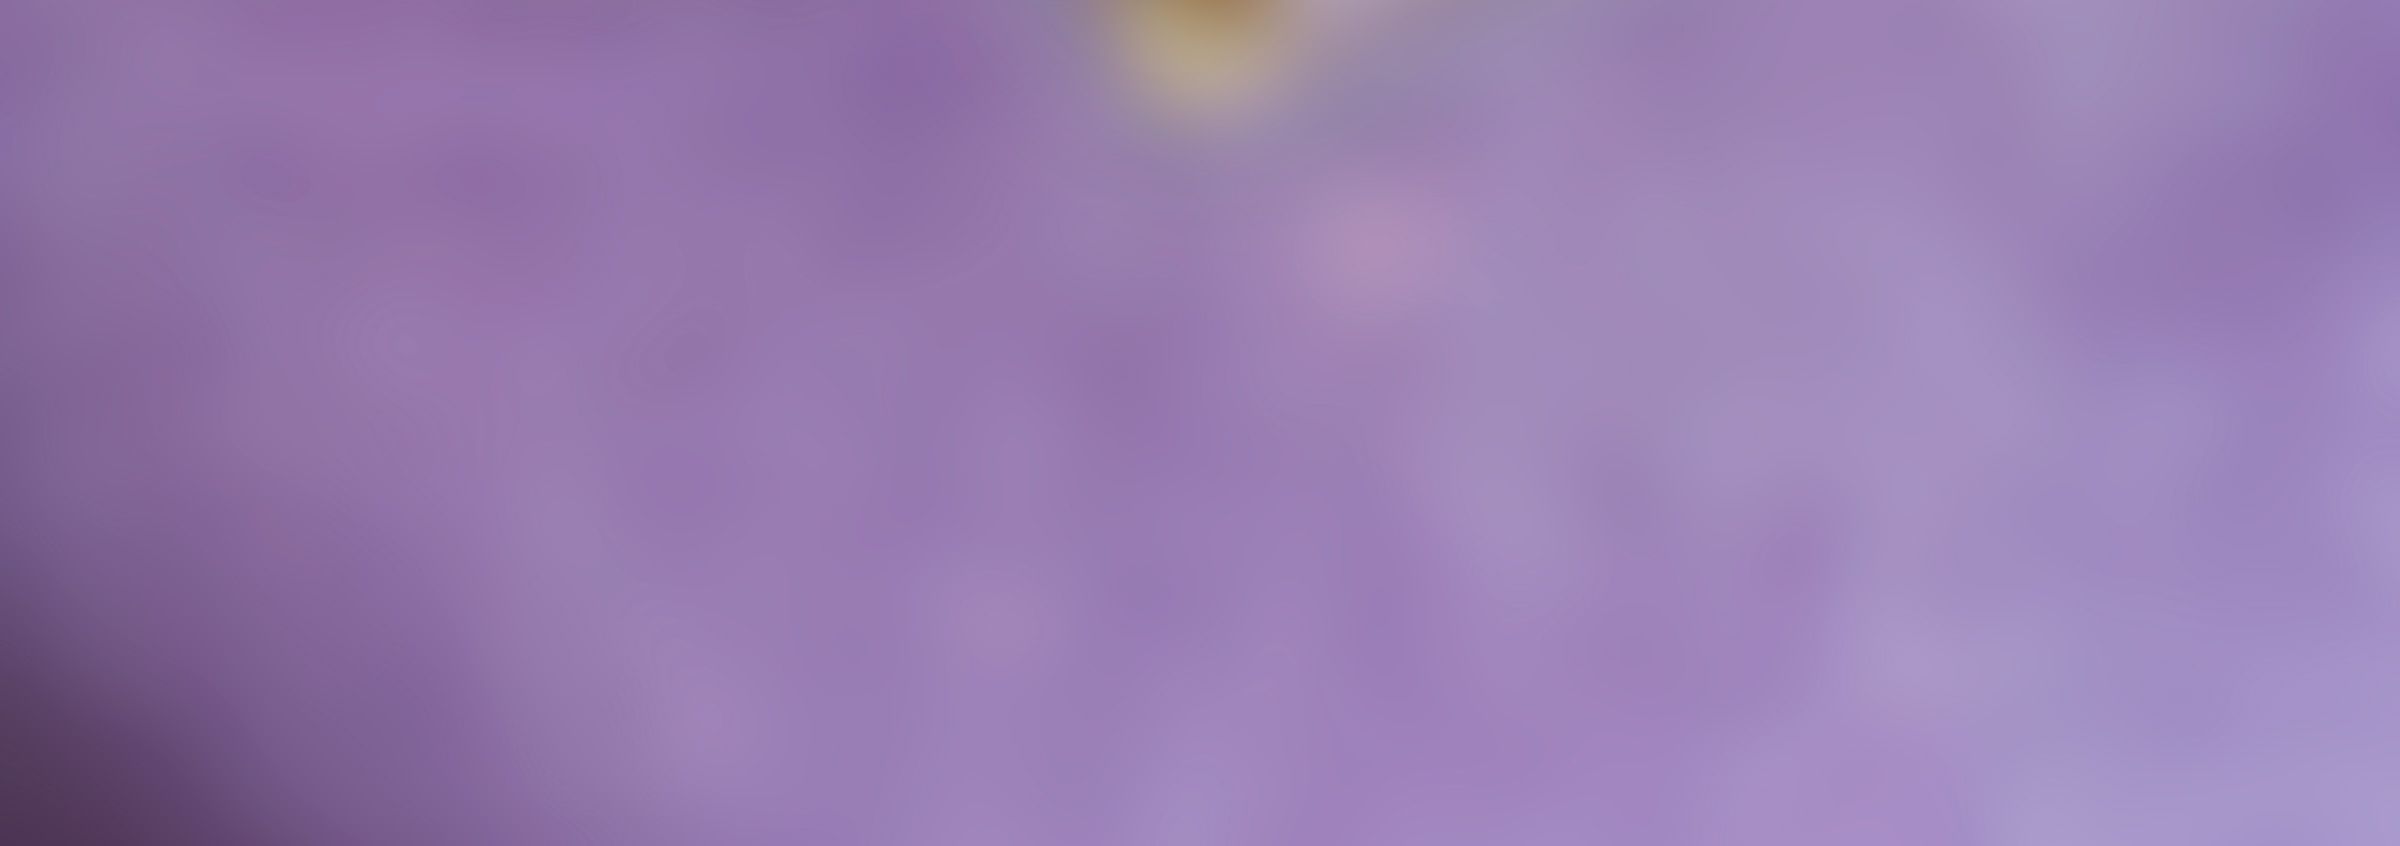 Blurred purple background image